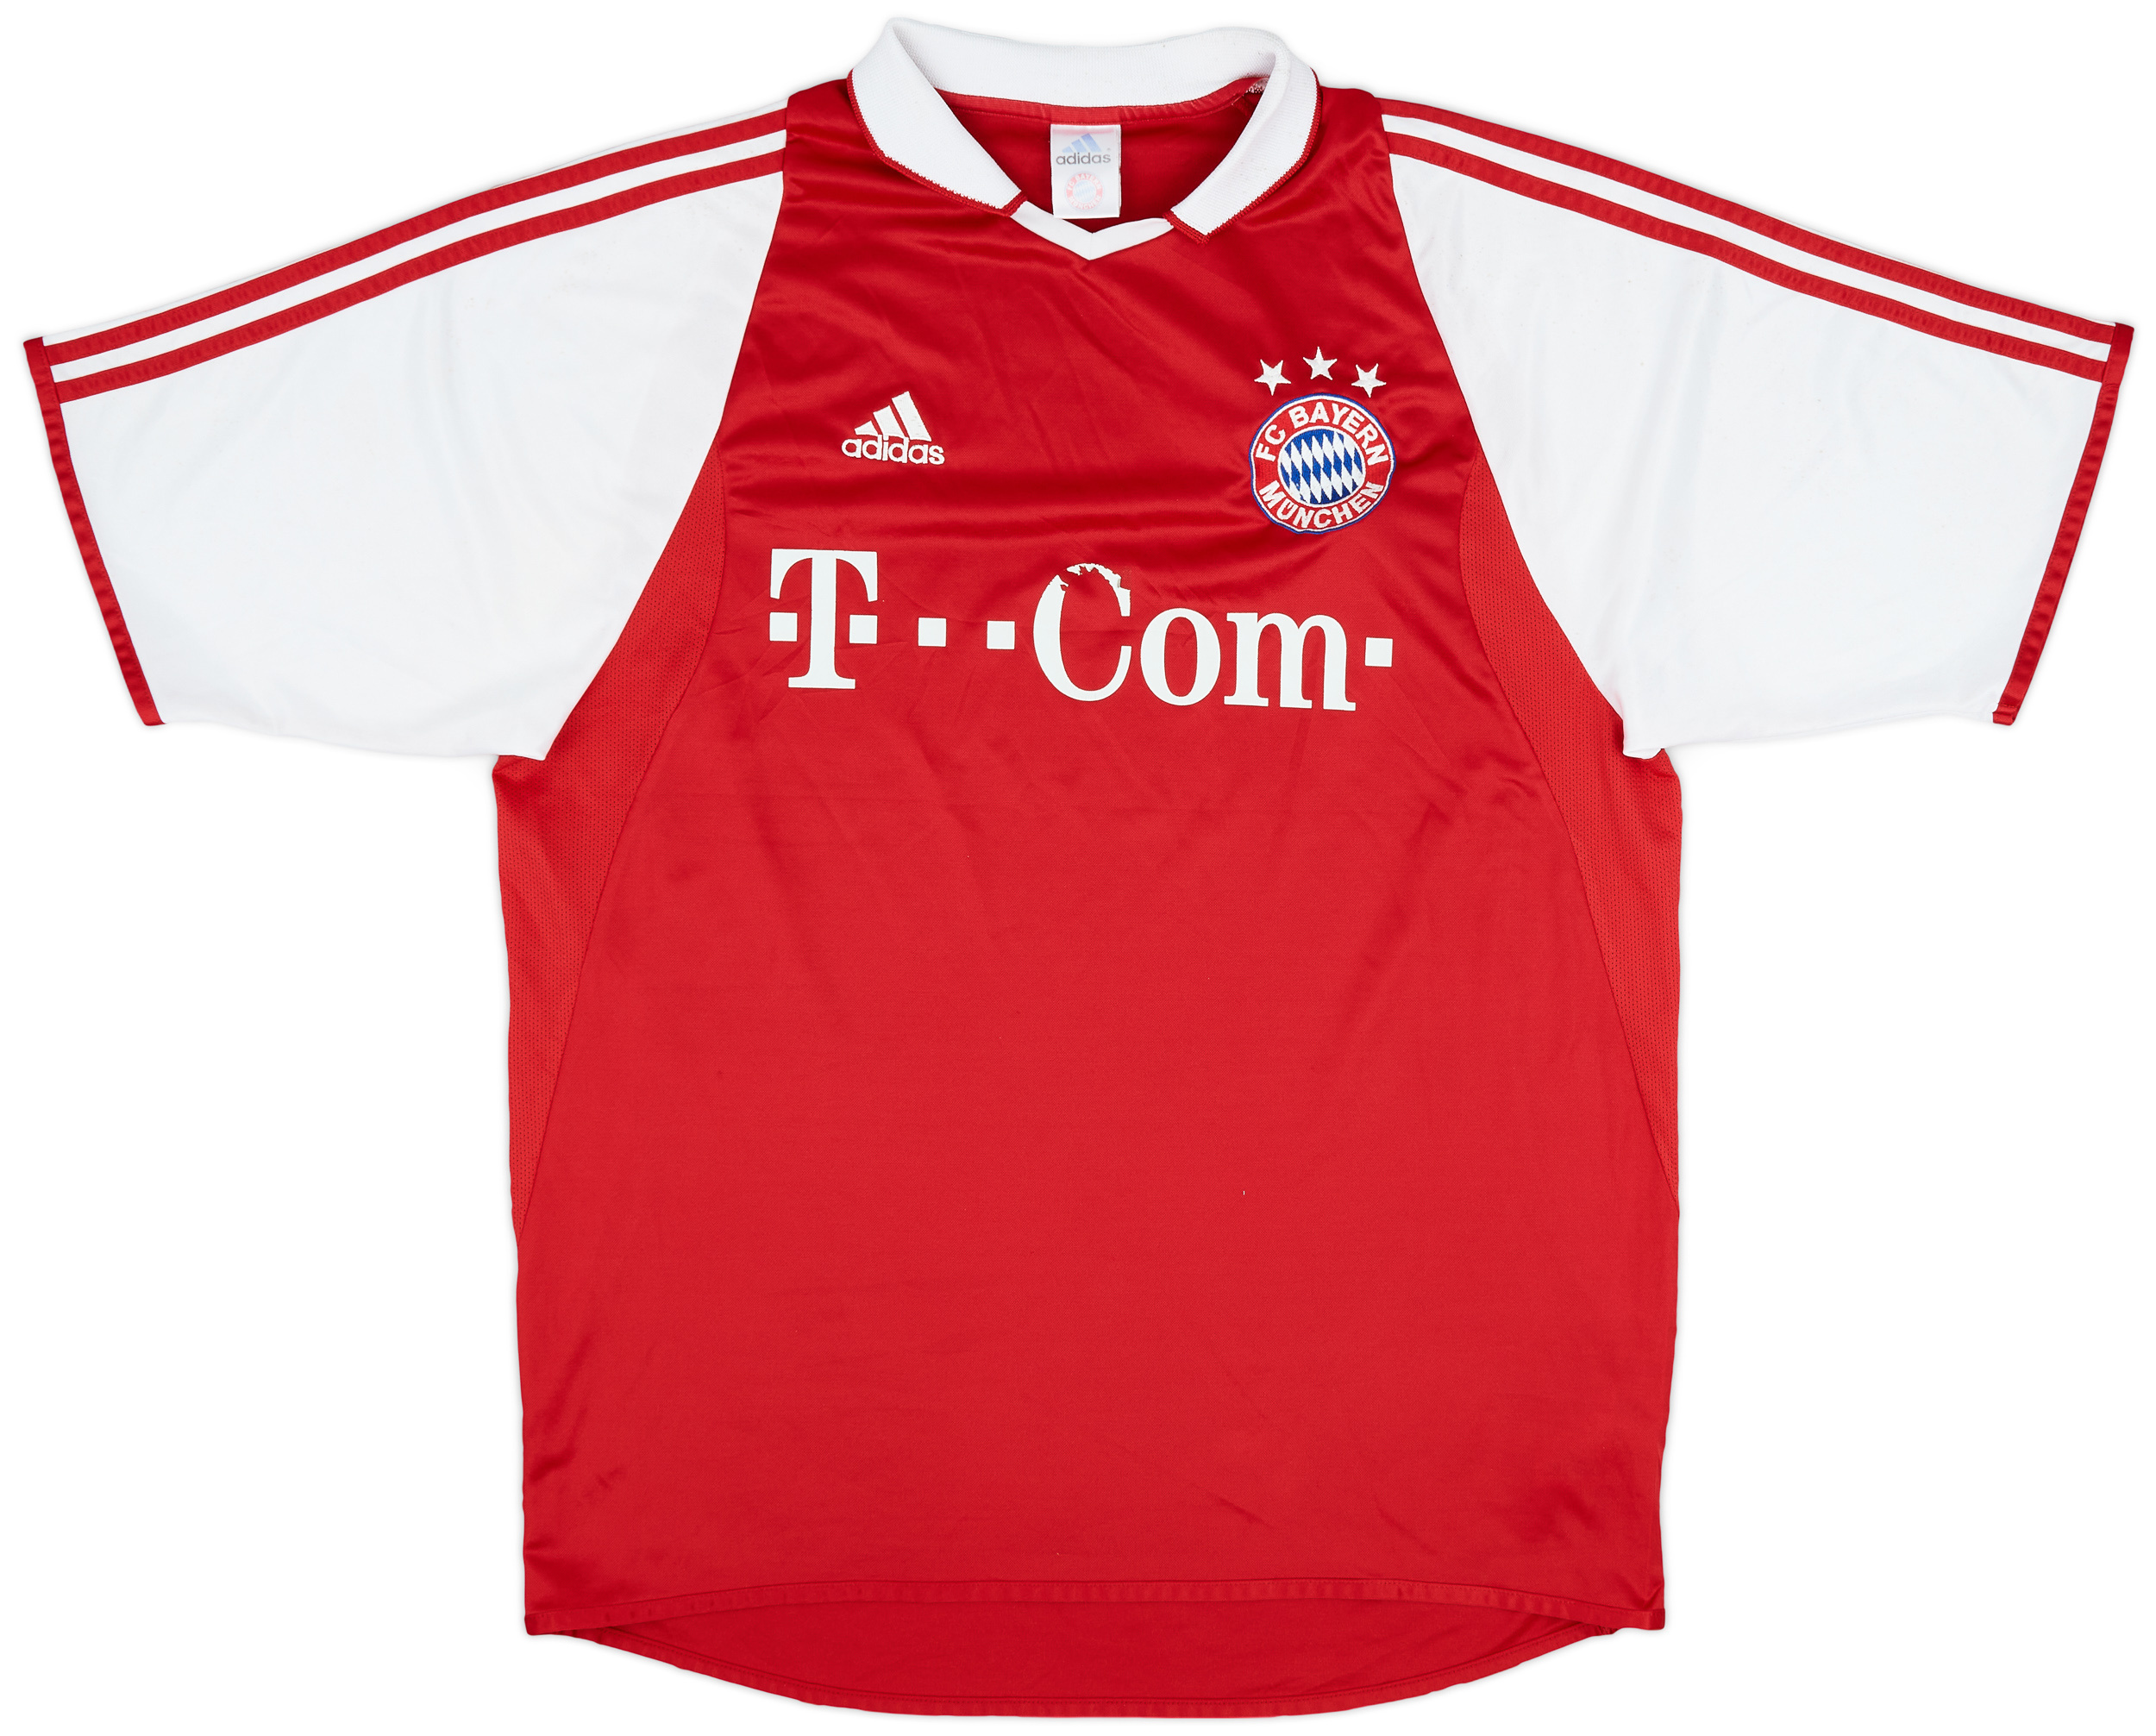 2003-04 Bayern Munich Home Shirt - 5/10 - ()